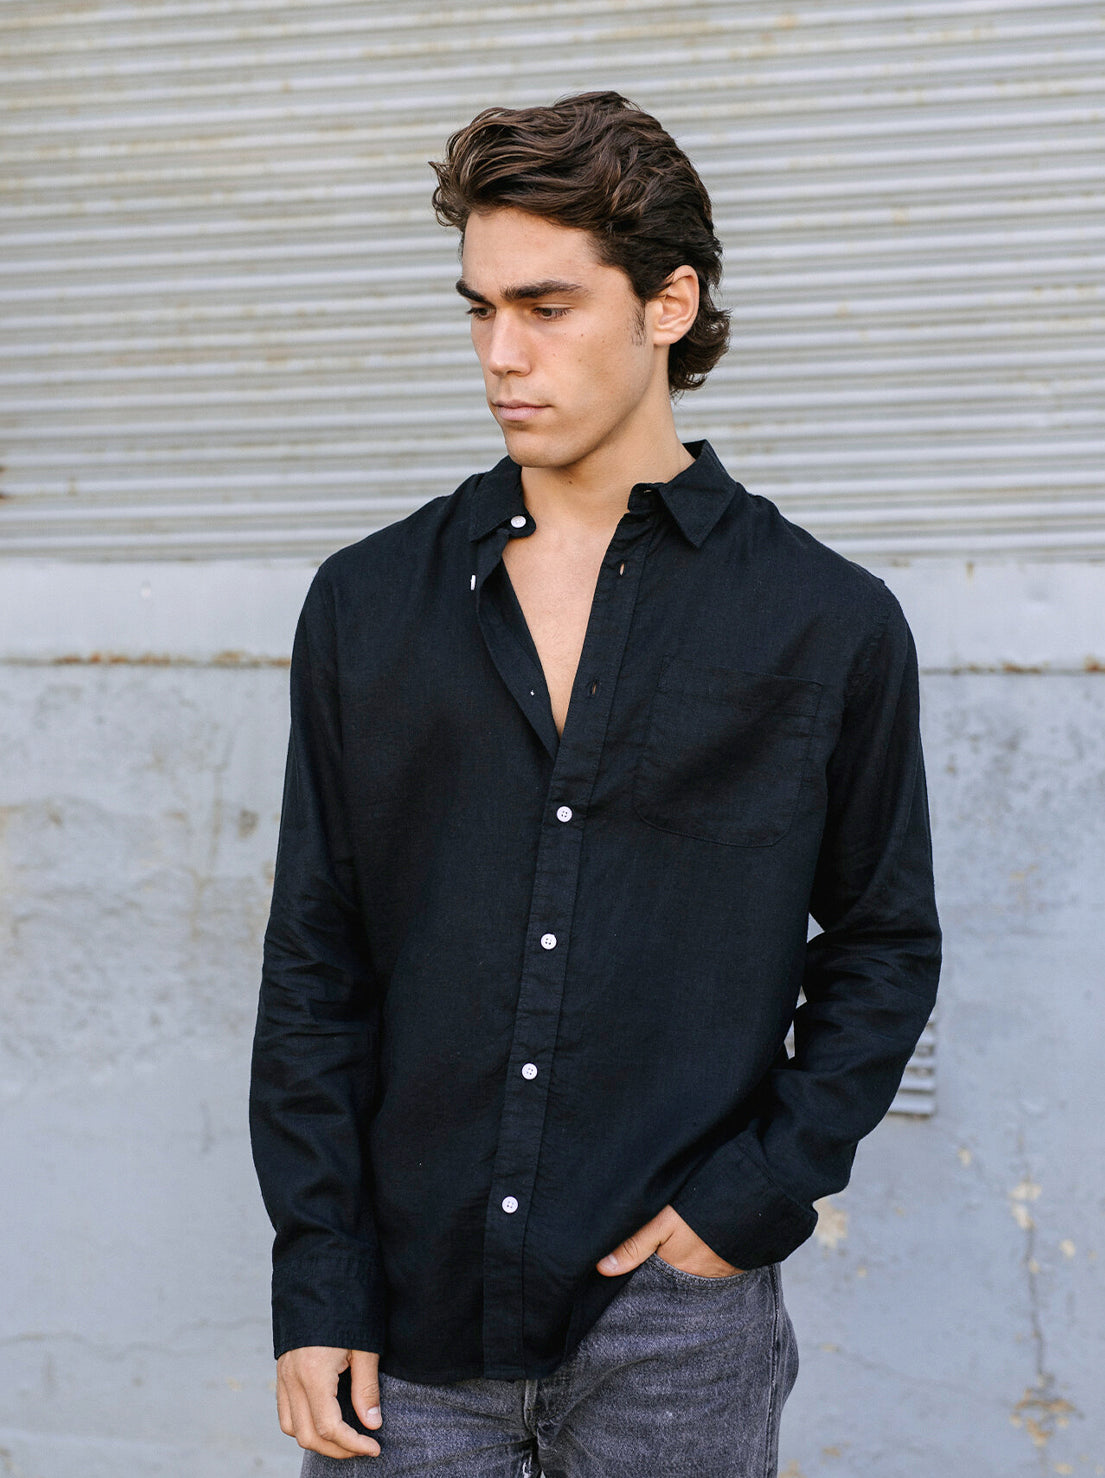 Hemp Clothing Australia - Newtown Shirt - Long Sleeve - Black